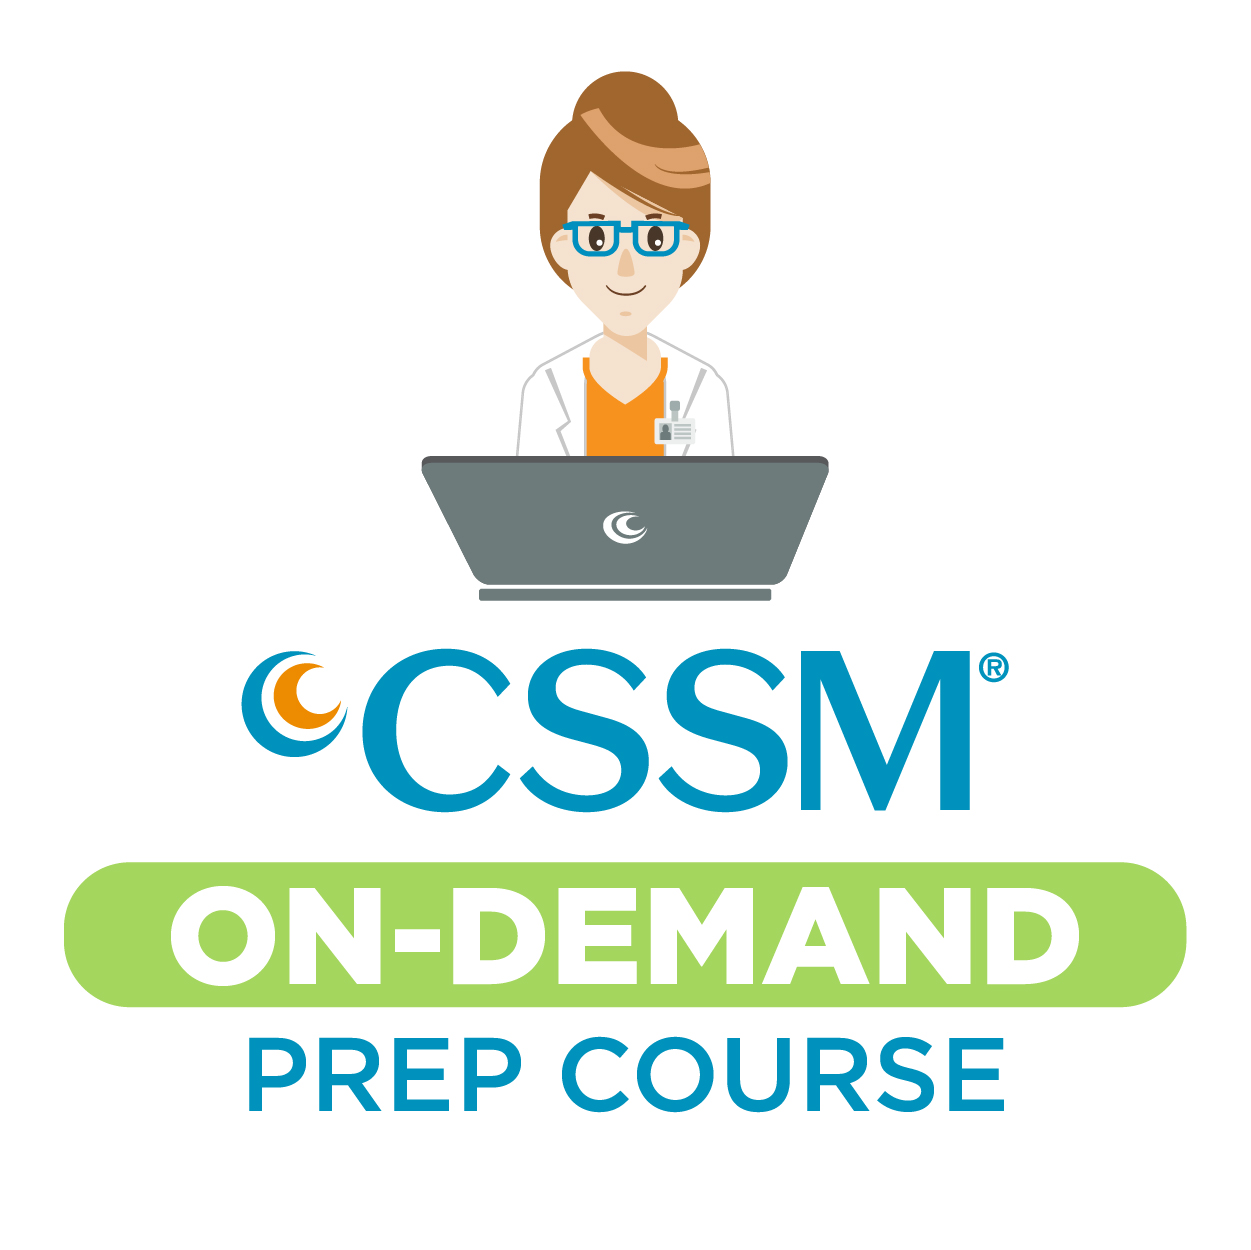 CSSM On Demand Prep Course